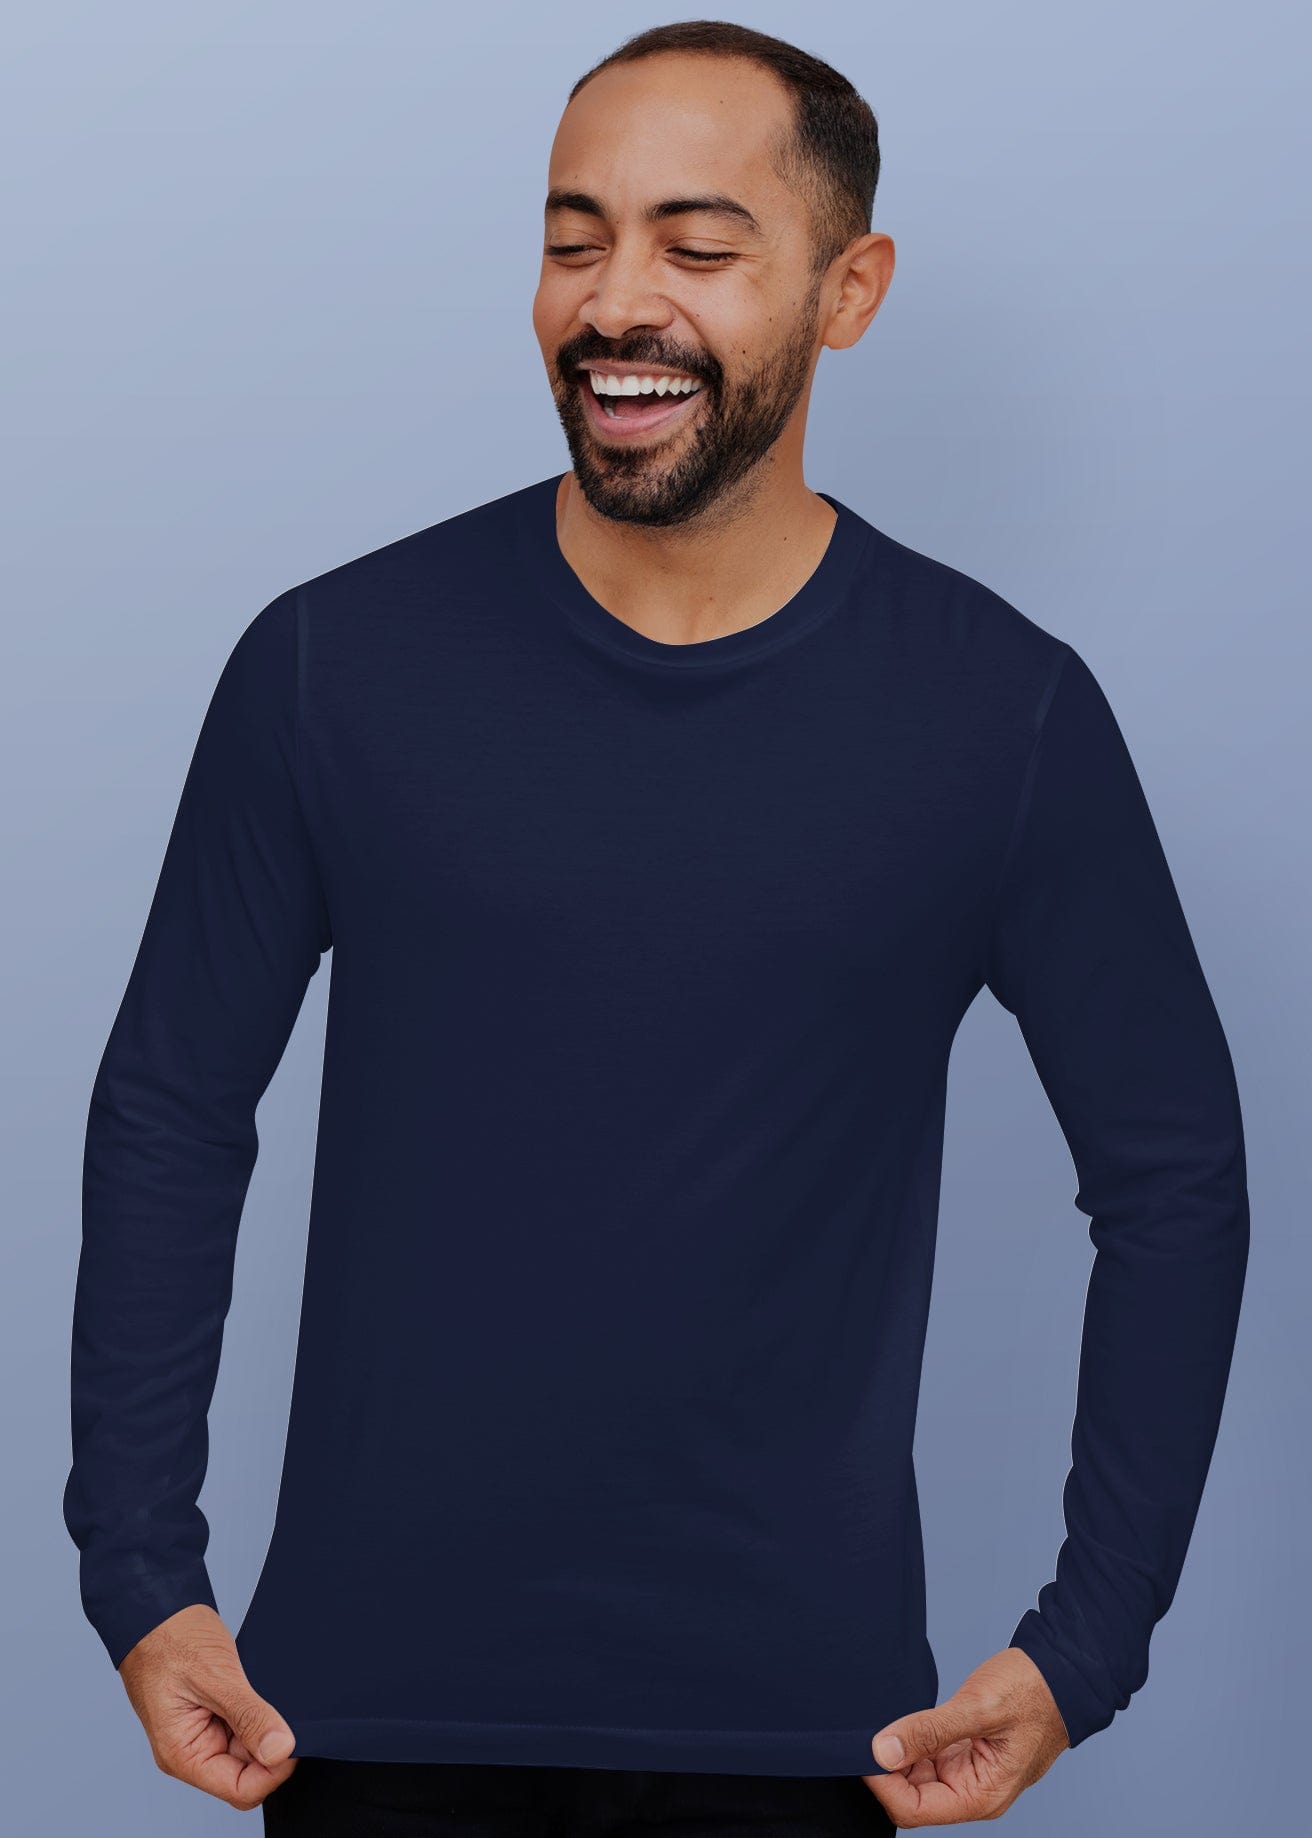 Solid Full Sleeve Premium Cotton T-shirt For Men